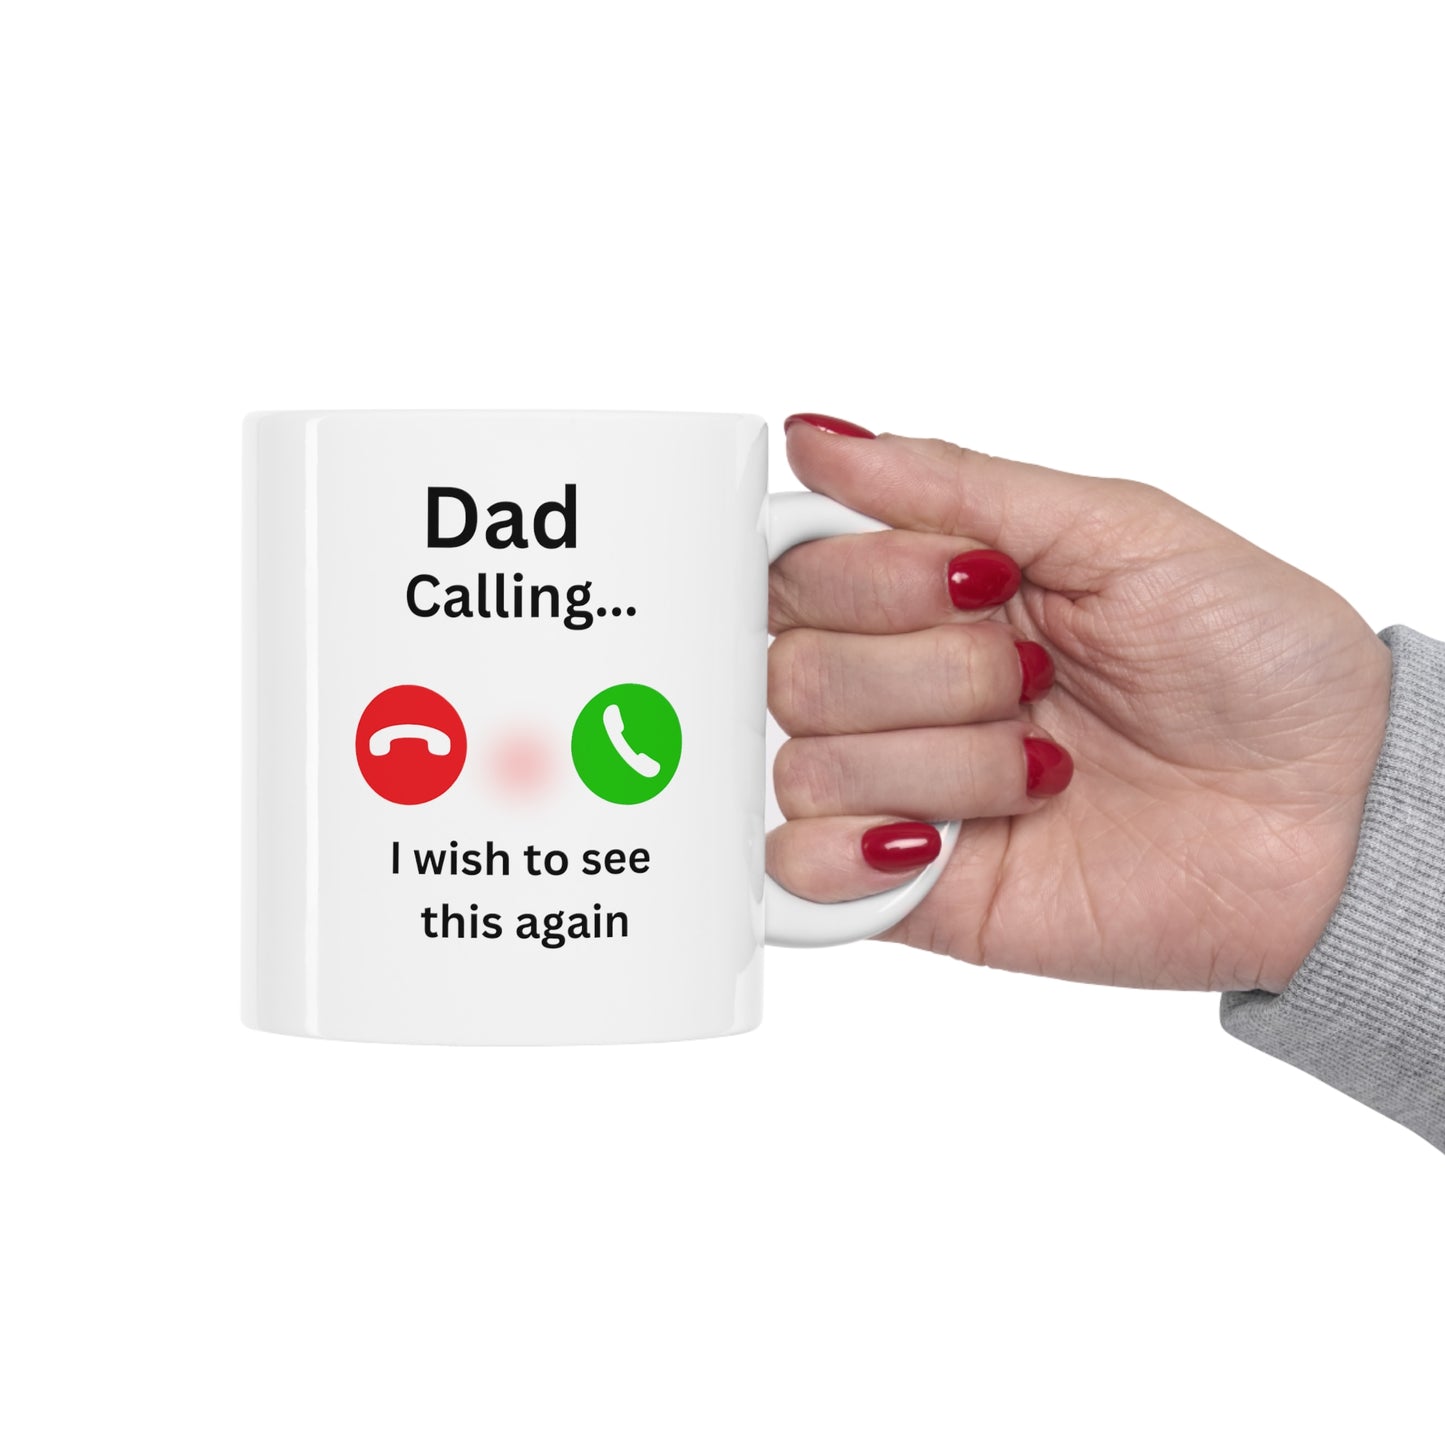 Dad Calling - Mug 11oz